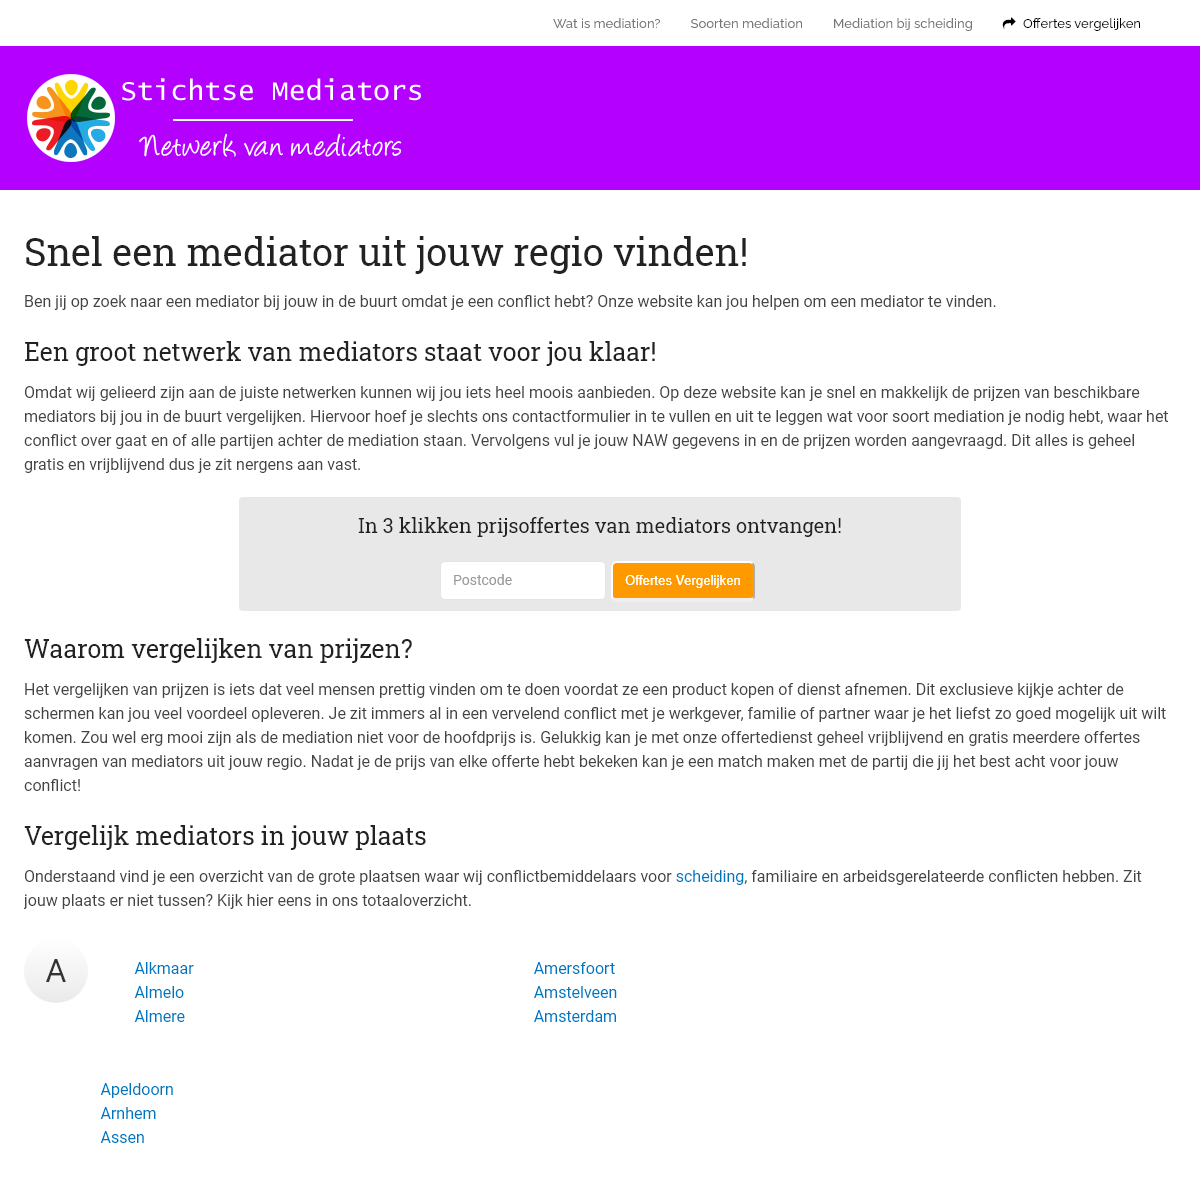 A complete backup of stichtsemediators.nl